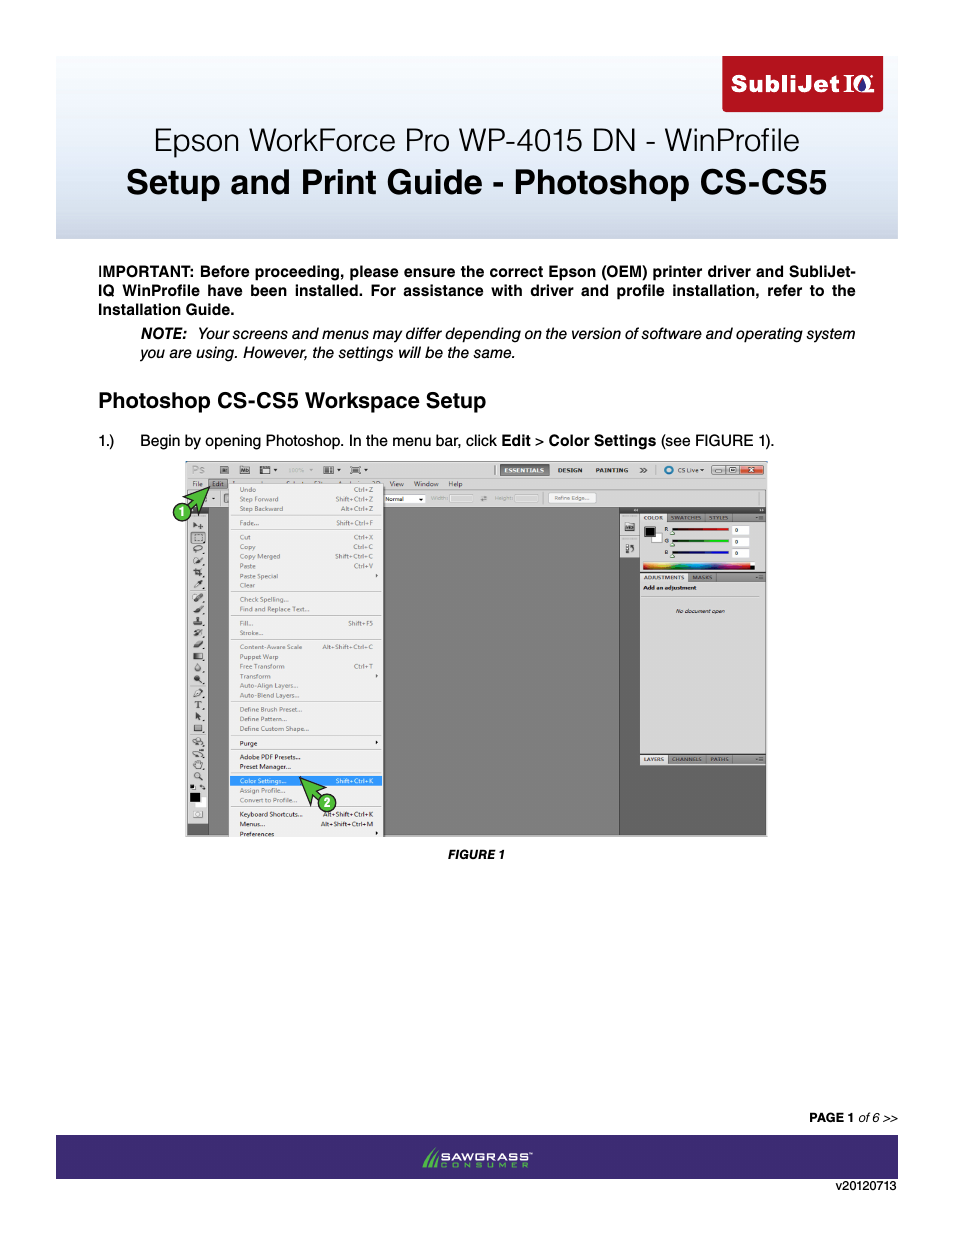 SubliJet IQ Epson WP-4015 (Windows ICC Profile Setup): Print & Setup Guide Adobe Photoshop CS - CS5